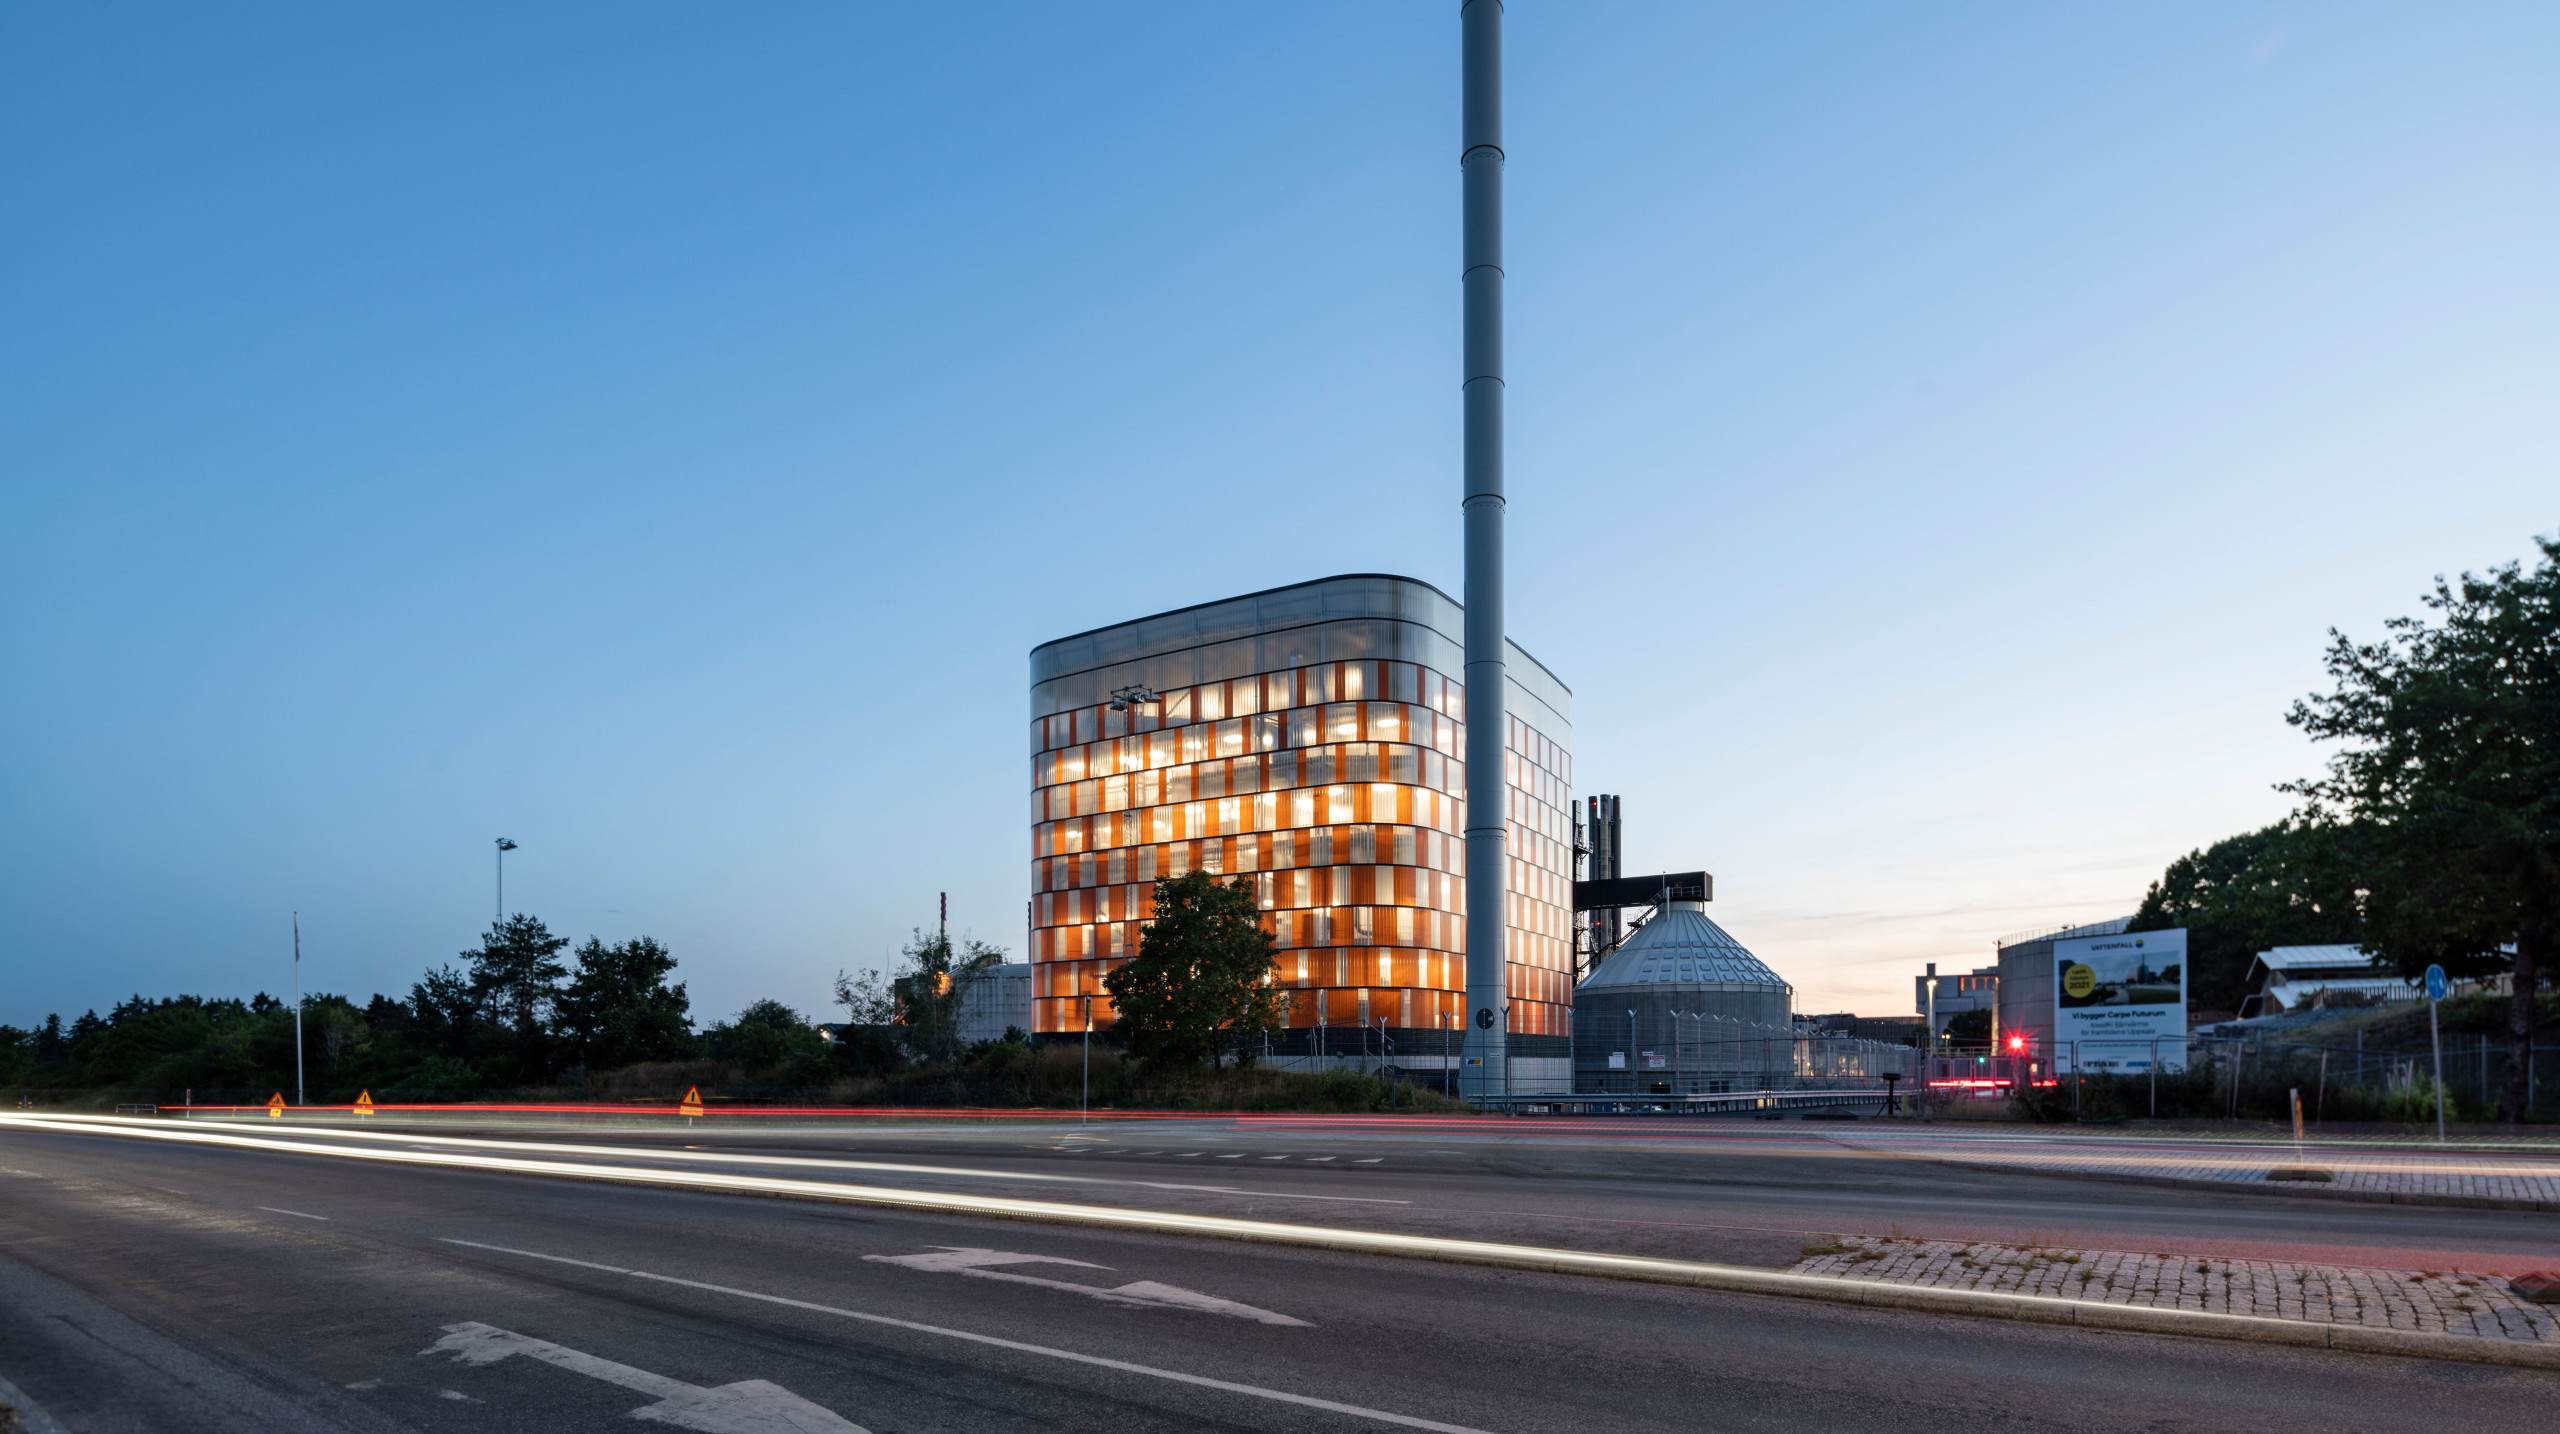 Vattenfall’s new power plant in Uppsala, Carpe Futurum. By architectural firm Liljewall arkitekter.